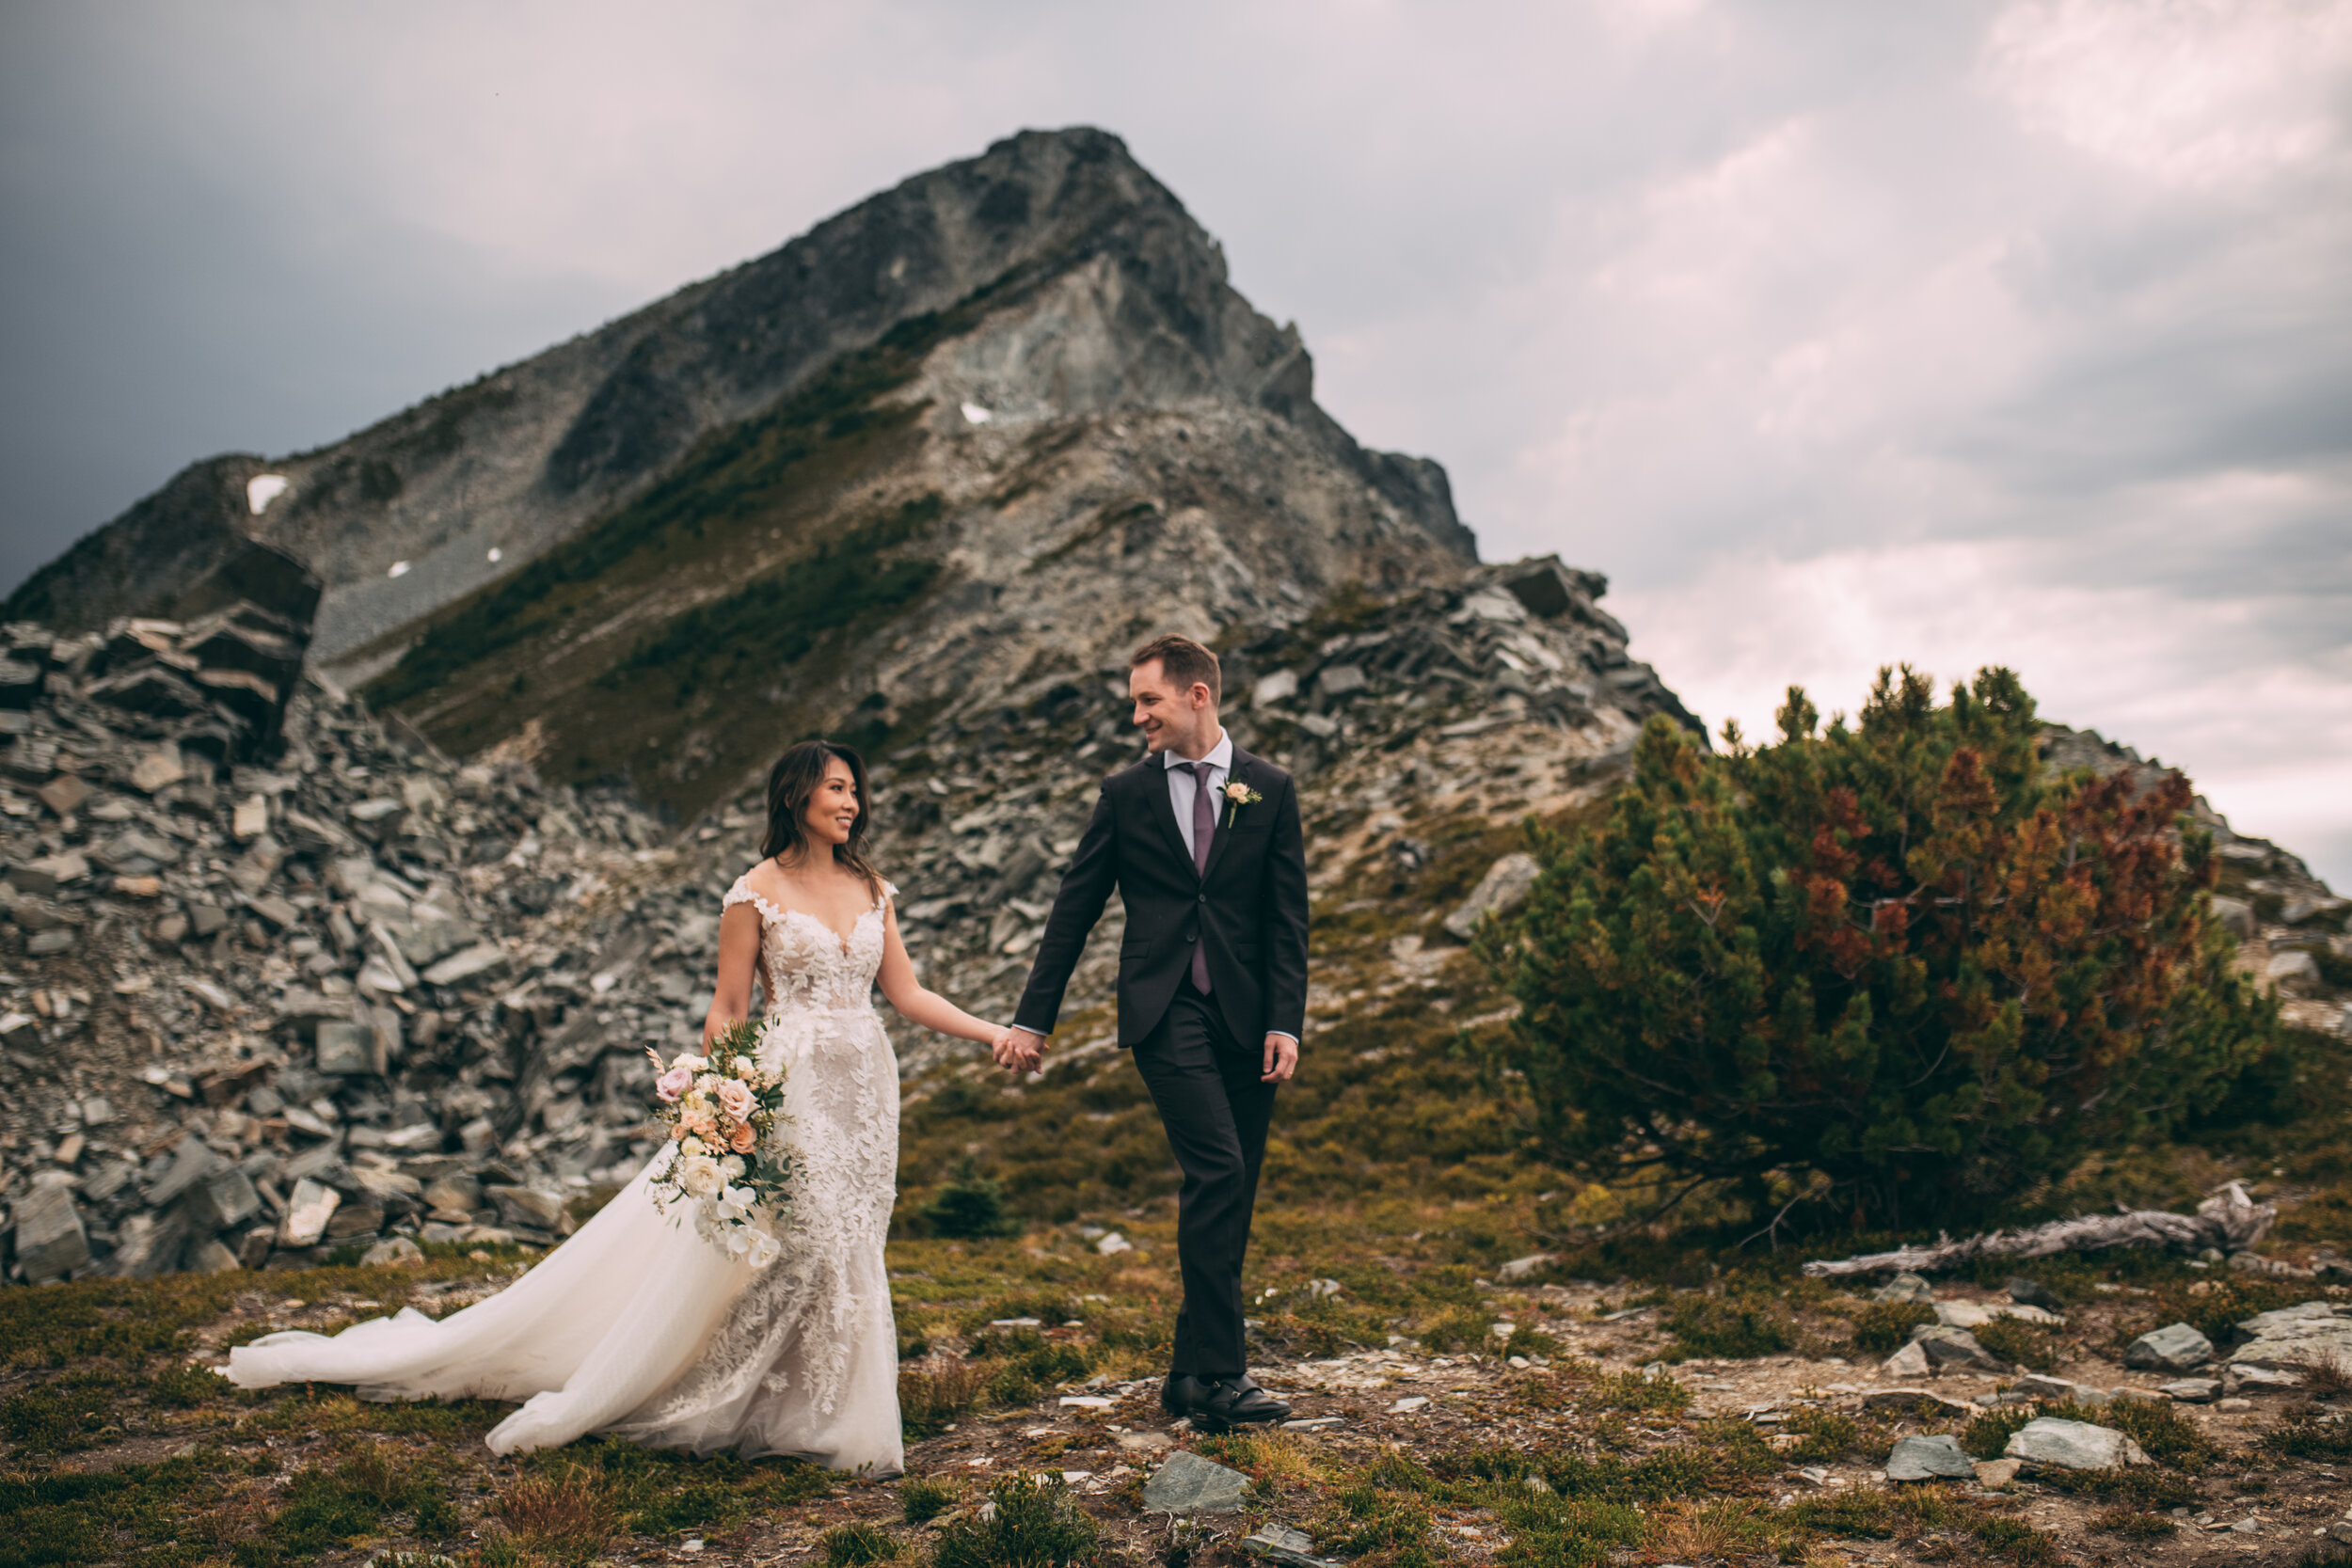 Katherine & Jamie Intimate Wedding - Whistler BC - September 4 2020 -1209.jpg